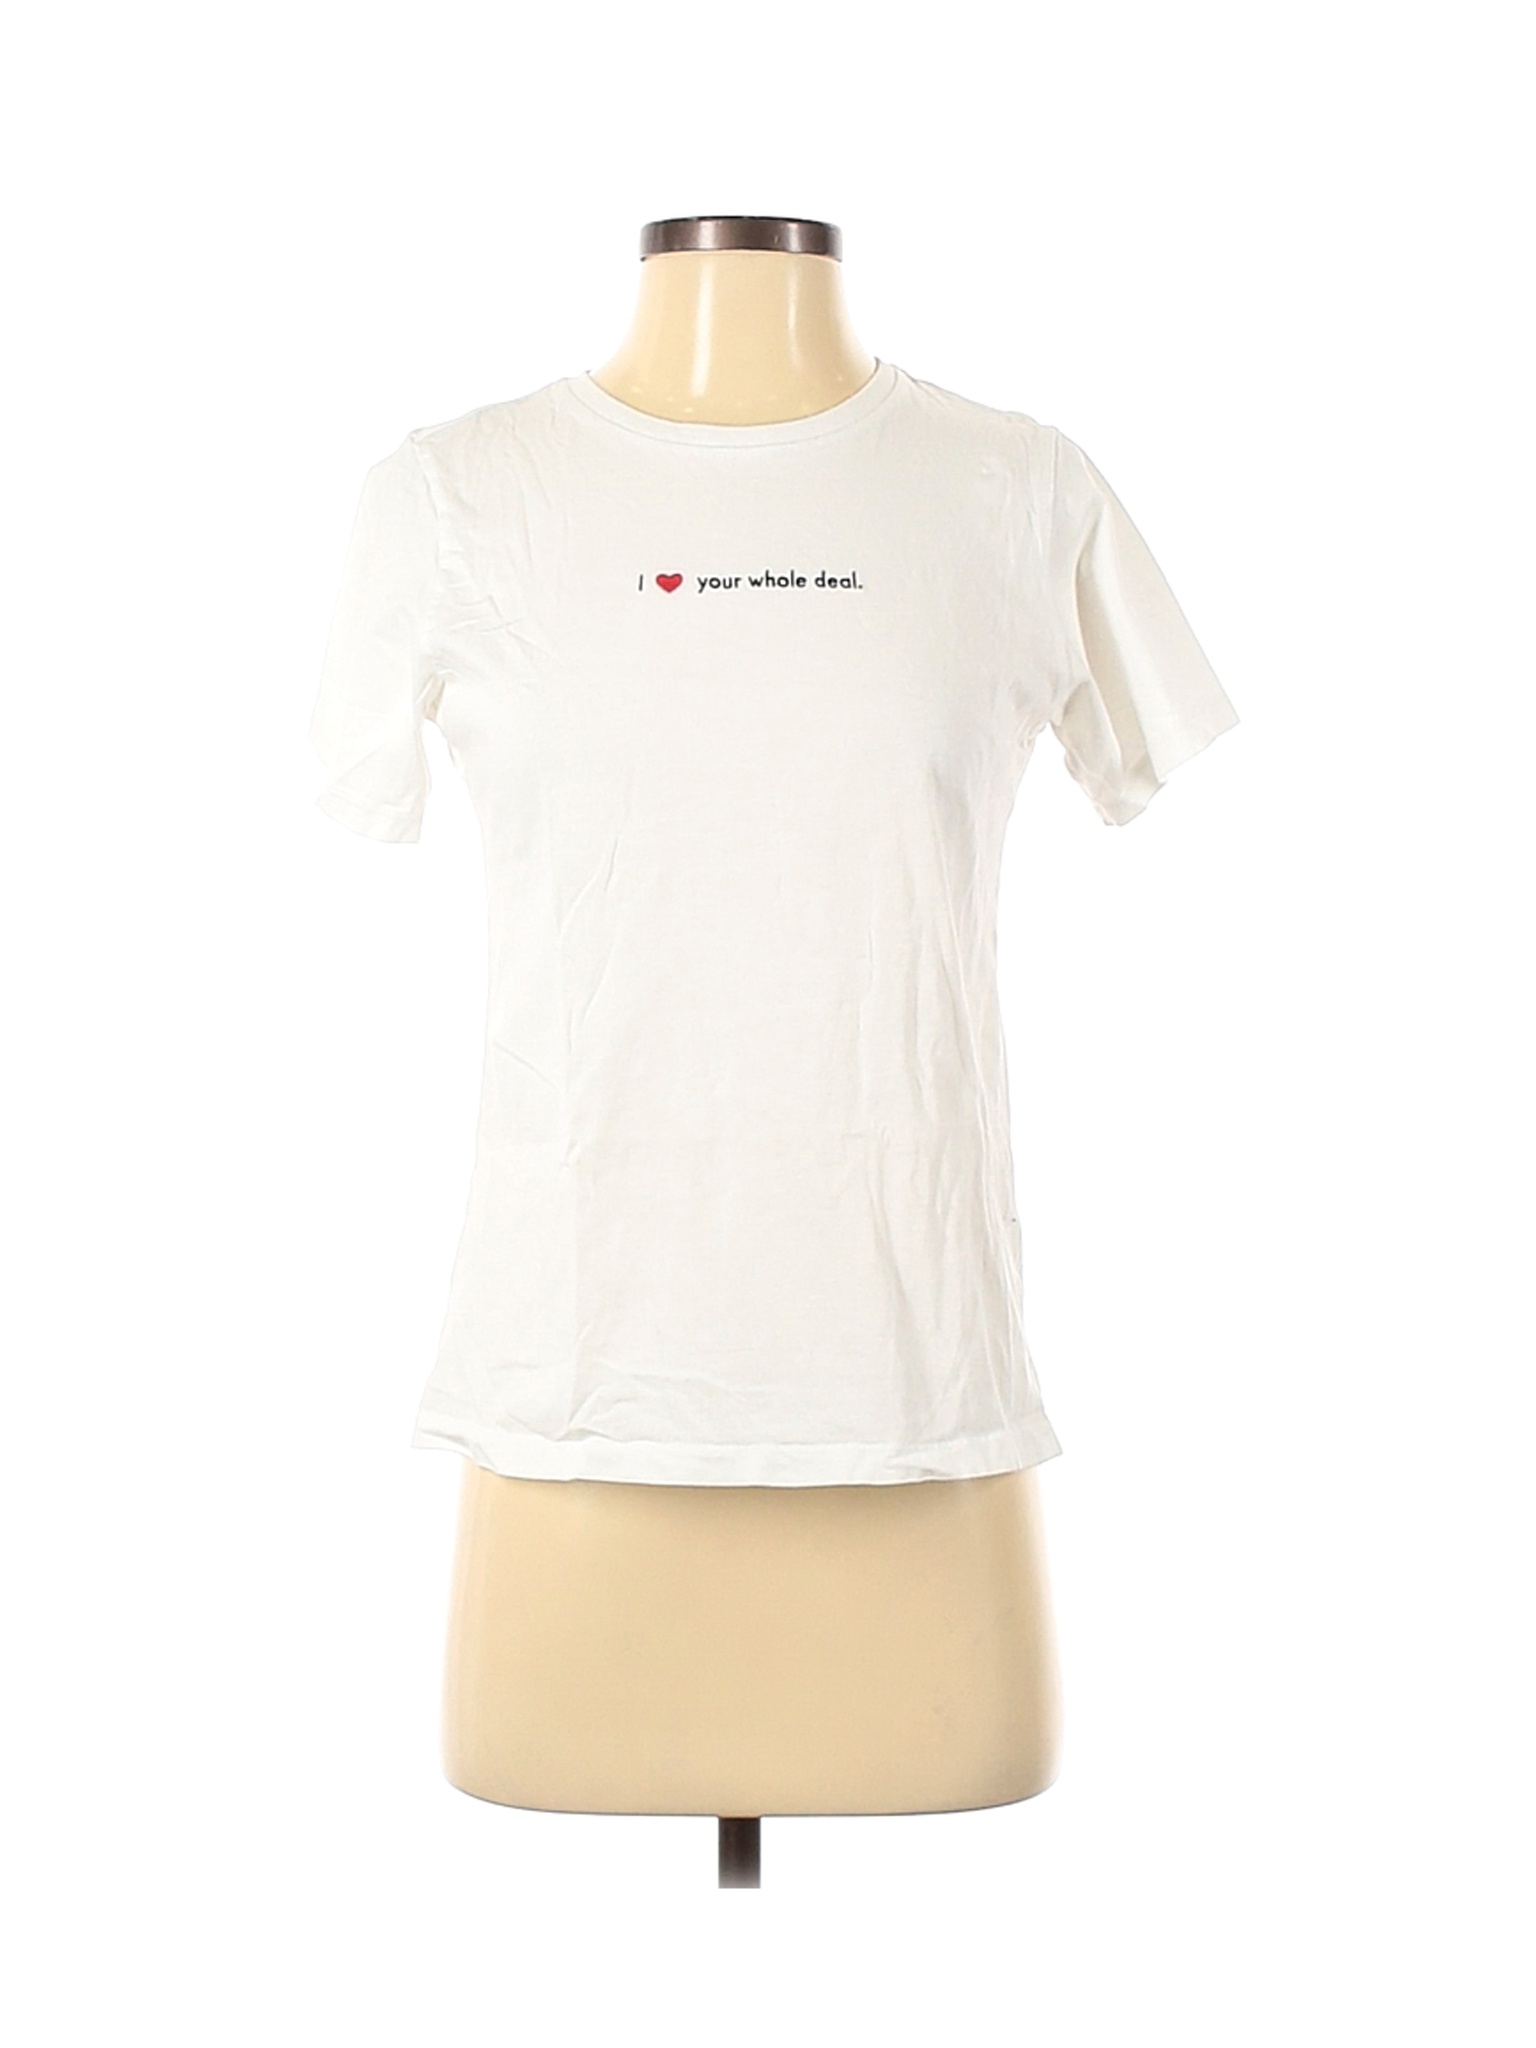 Uniqlo Women White Short Sleeve T-Shirt S | eBay